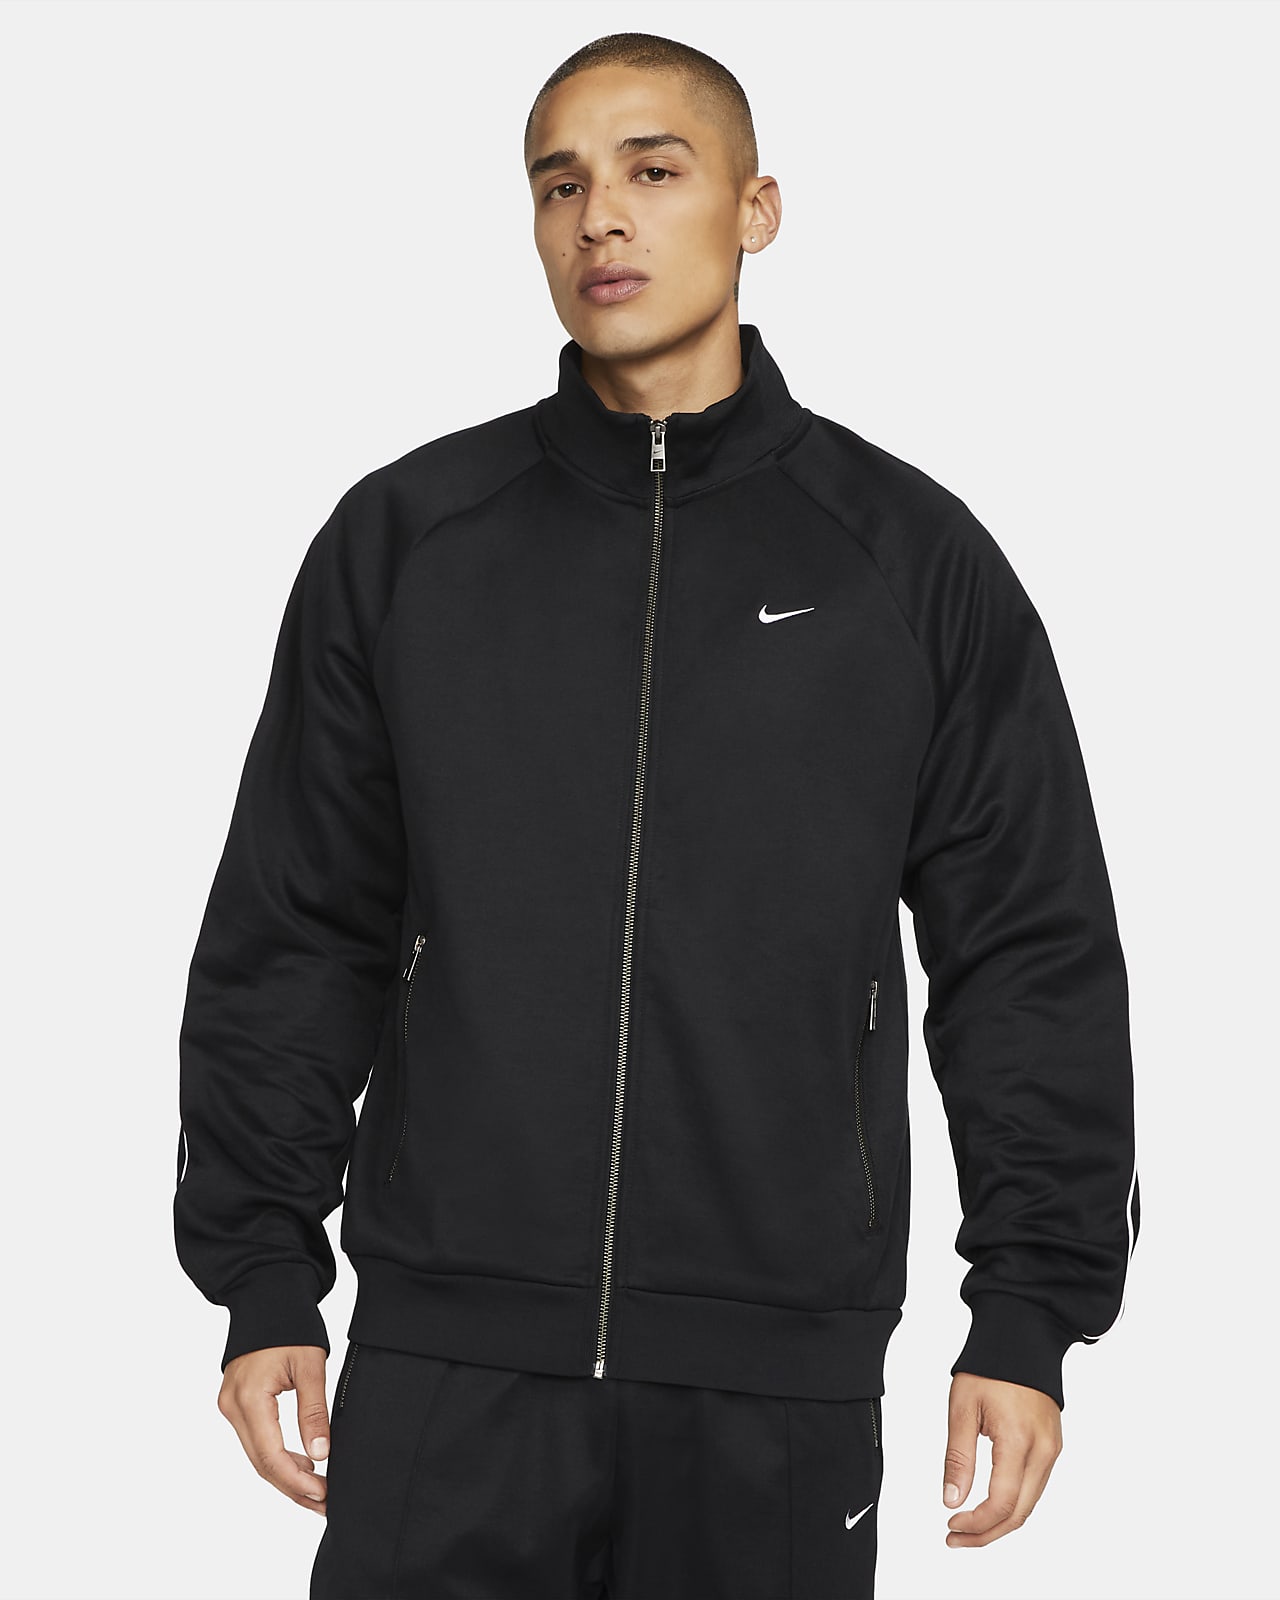 Nike Sportswear Men's Tracksuit Jacket. Nike AT